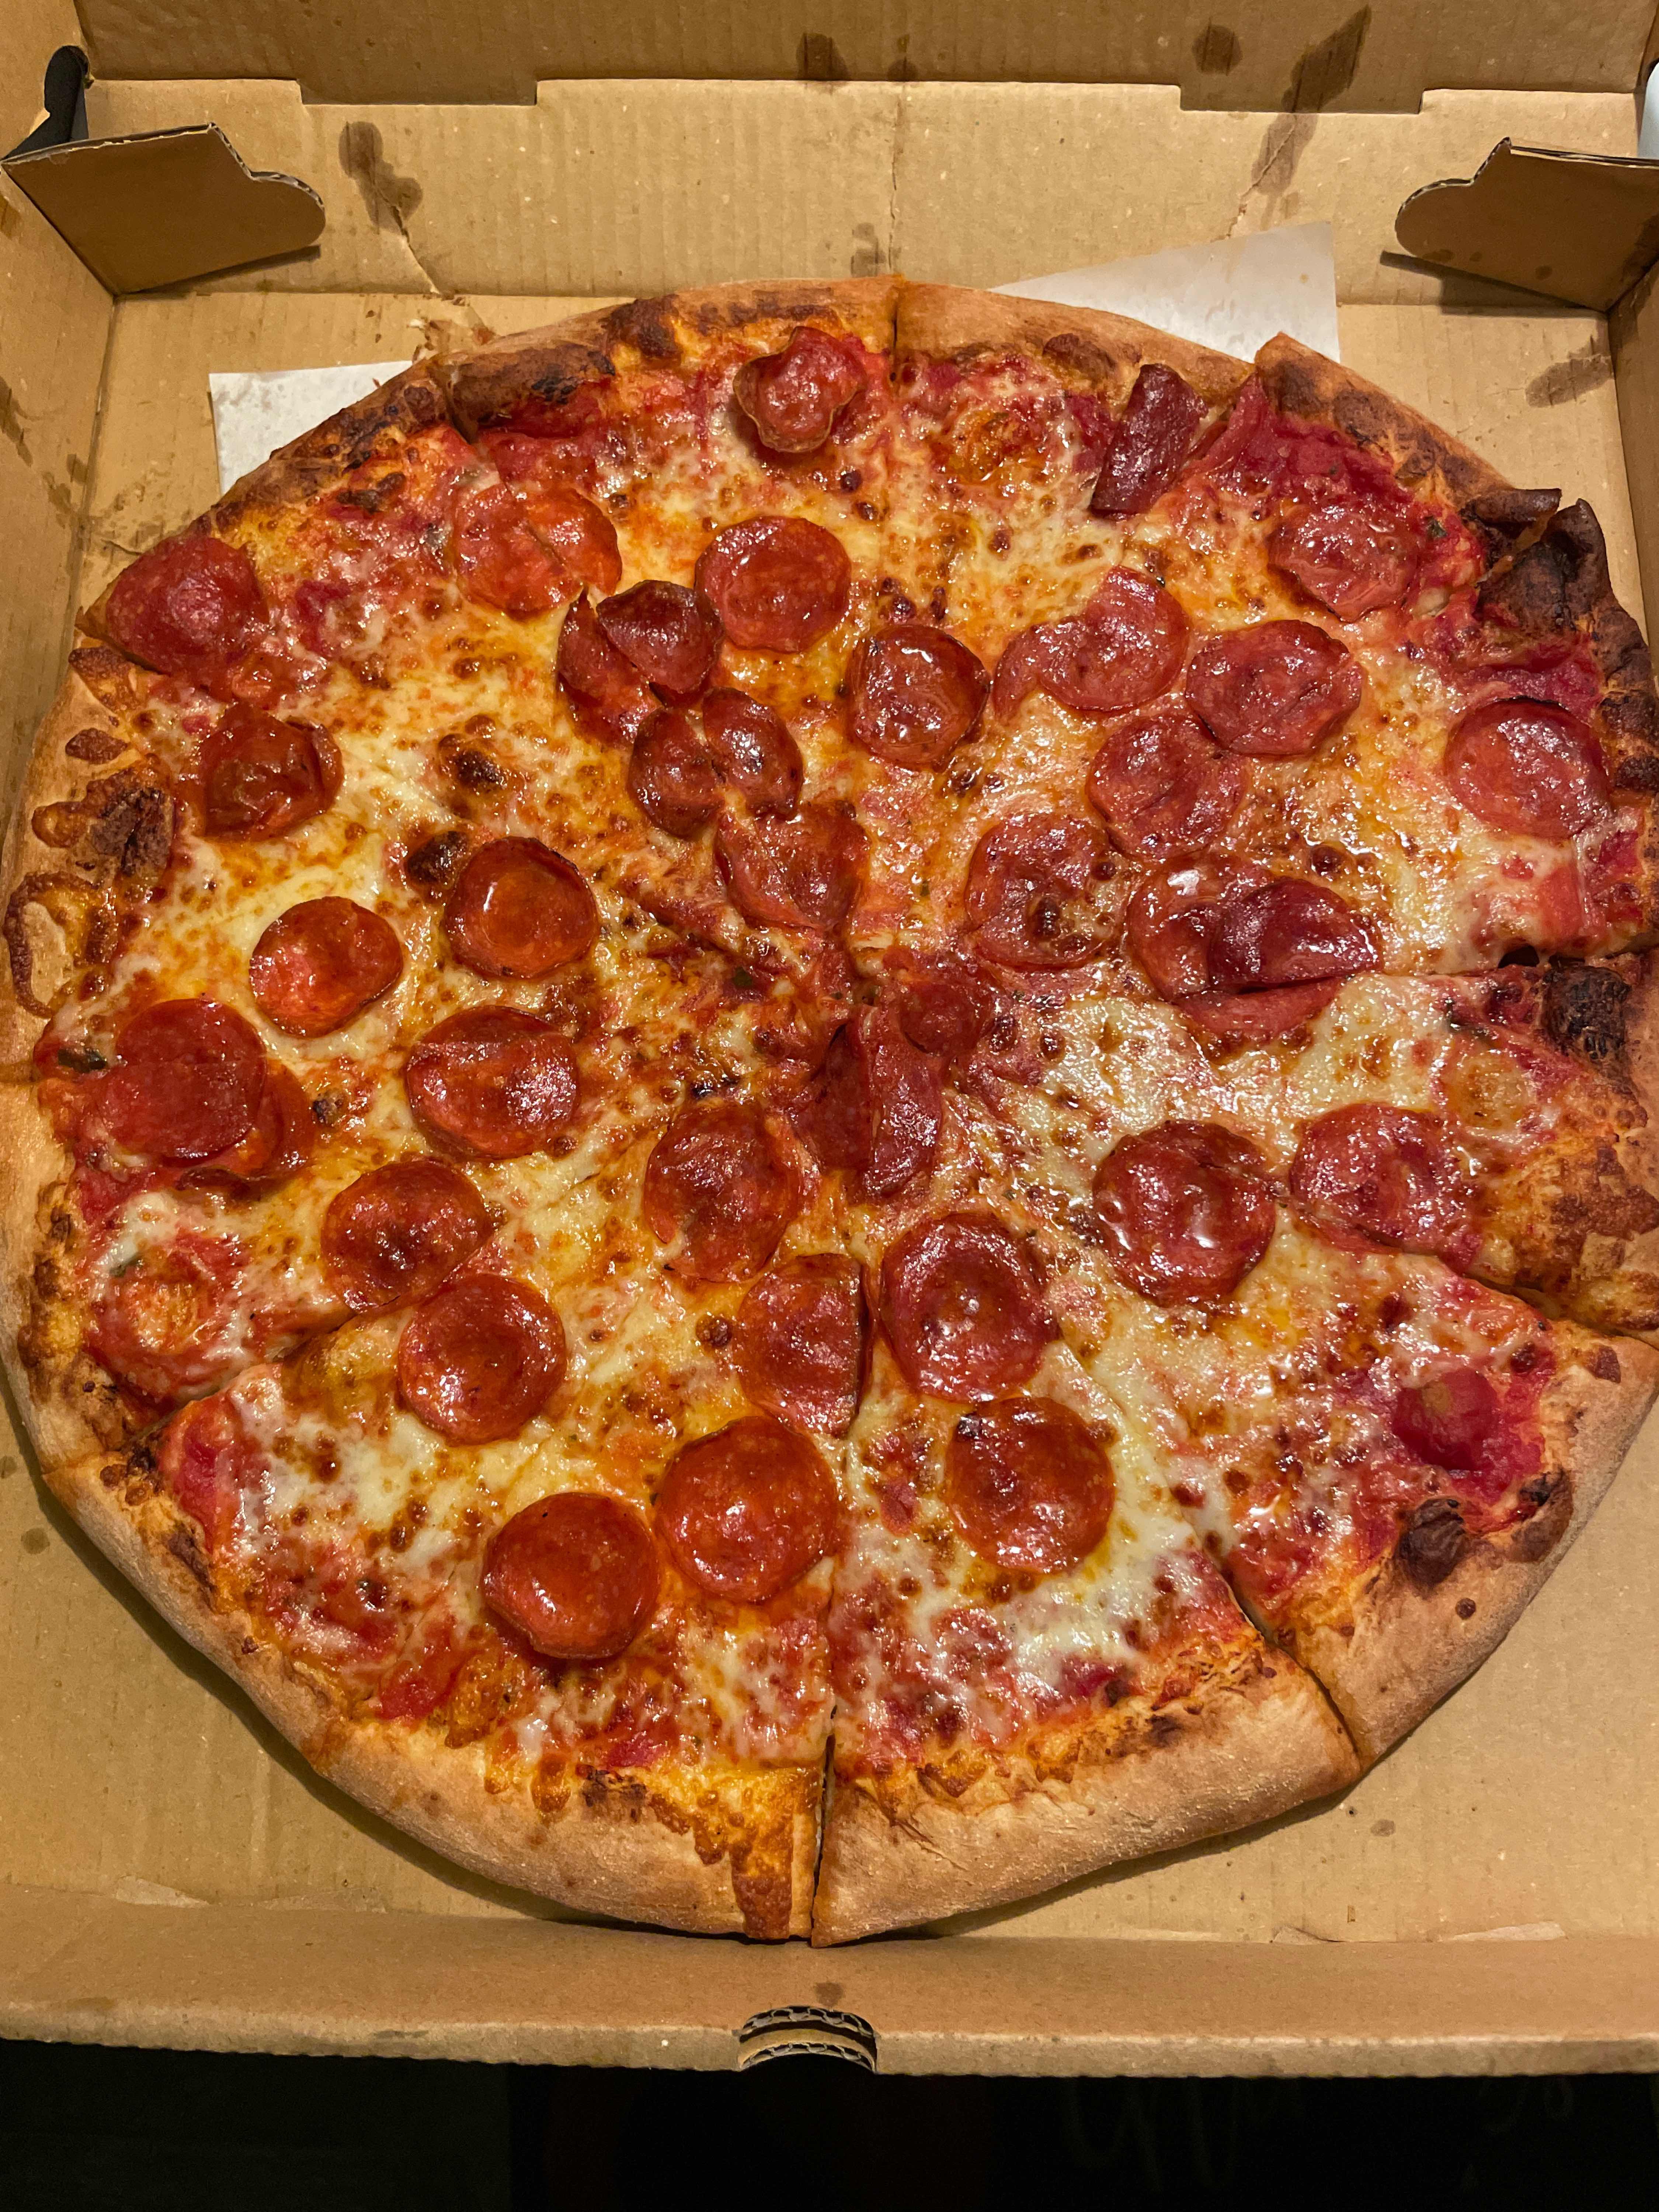 Papa's Pizza - Salem - Menu & Hours - Order Delivery